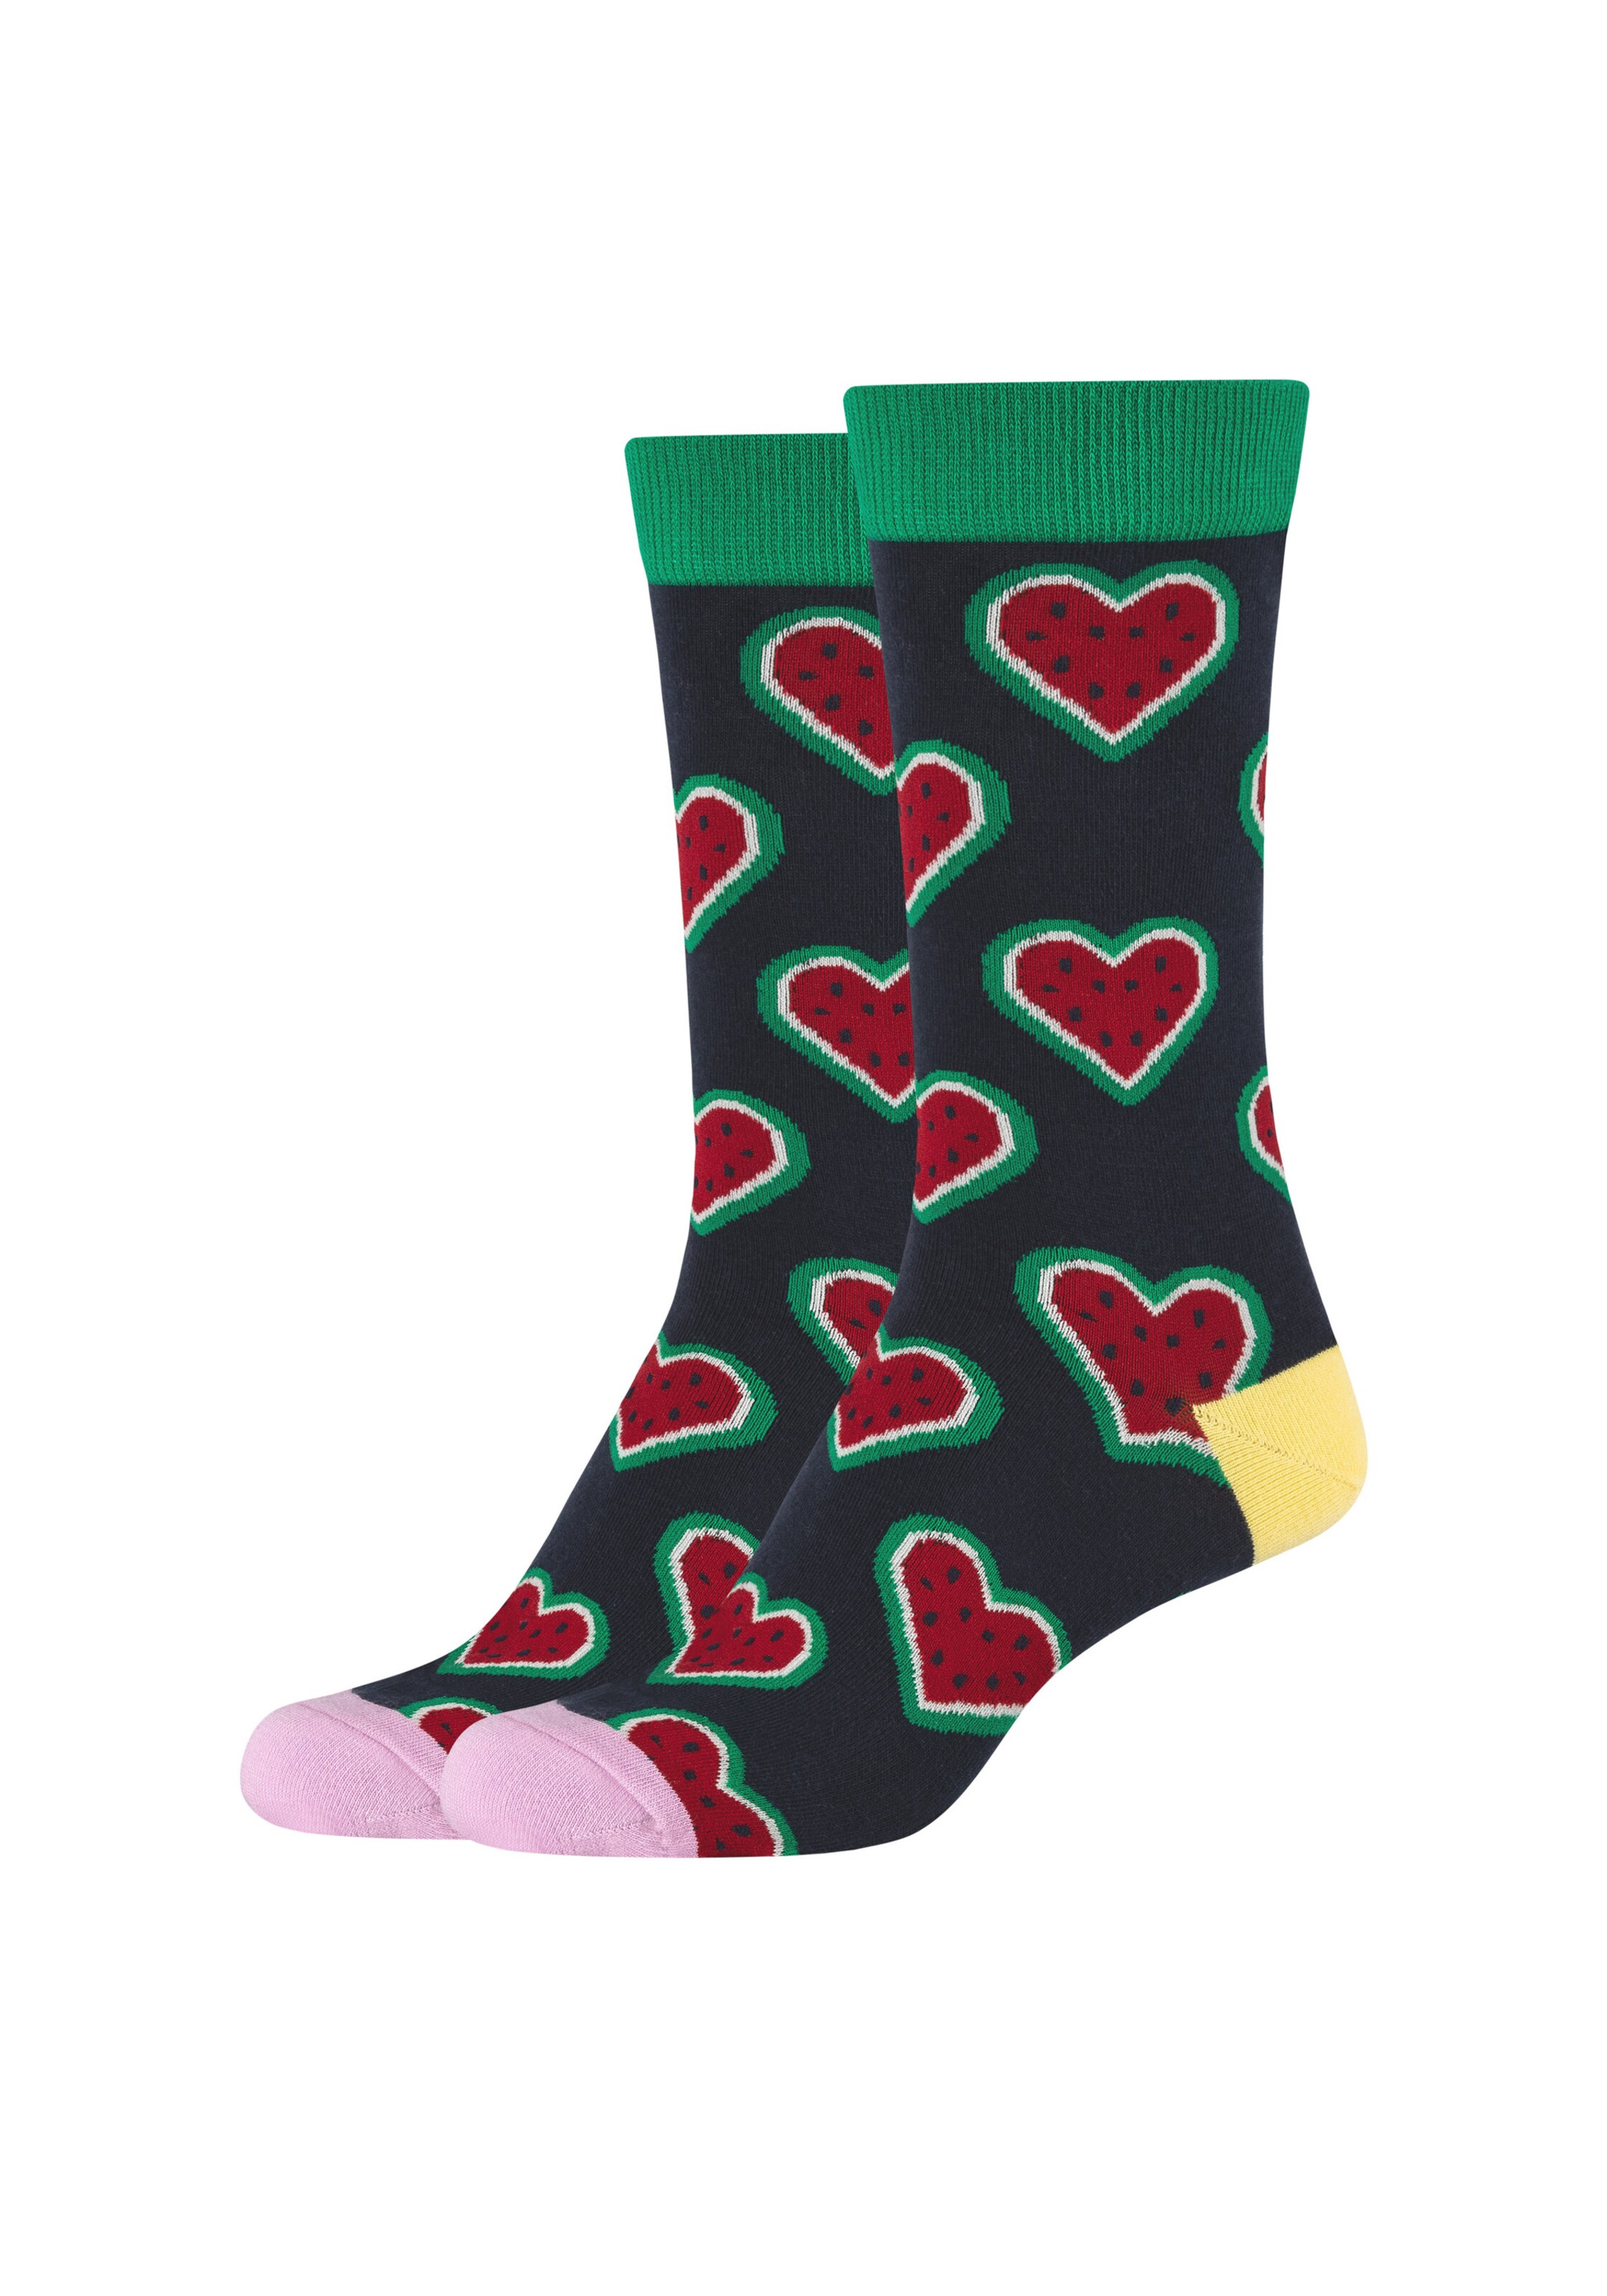 FUN Socks Socken in Mischfarben 